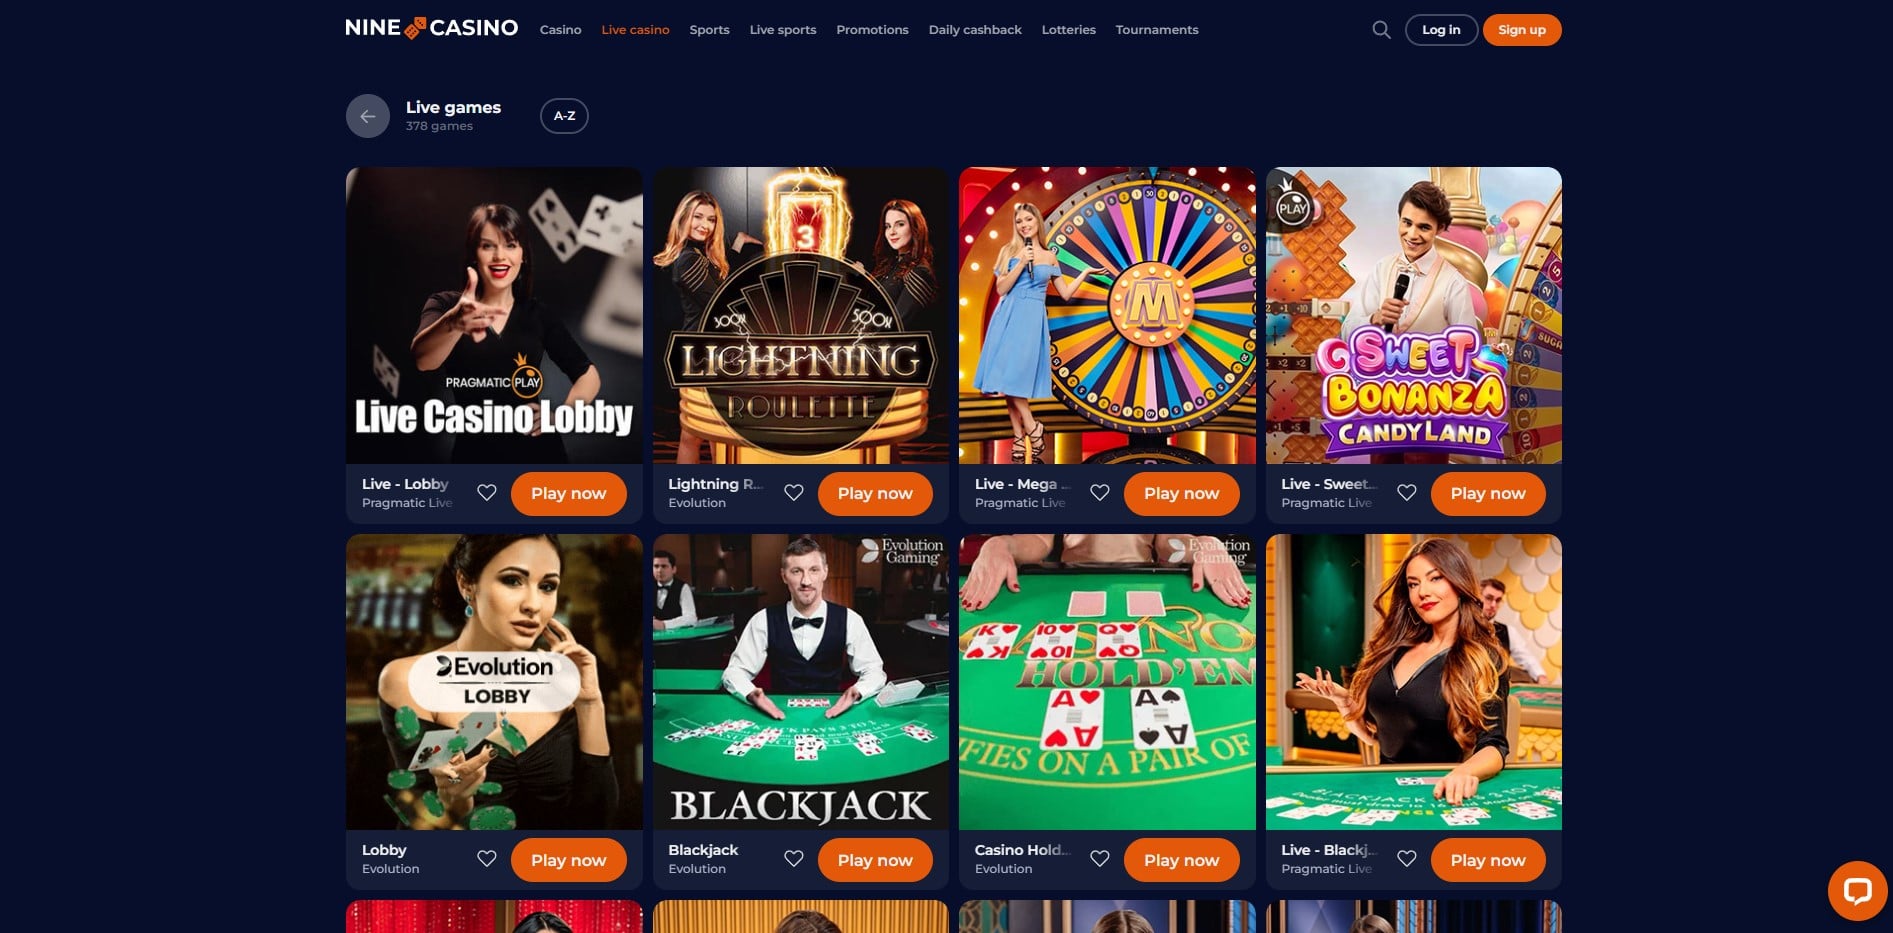 betway hippodrome online casino